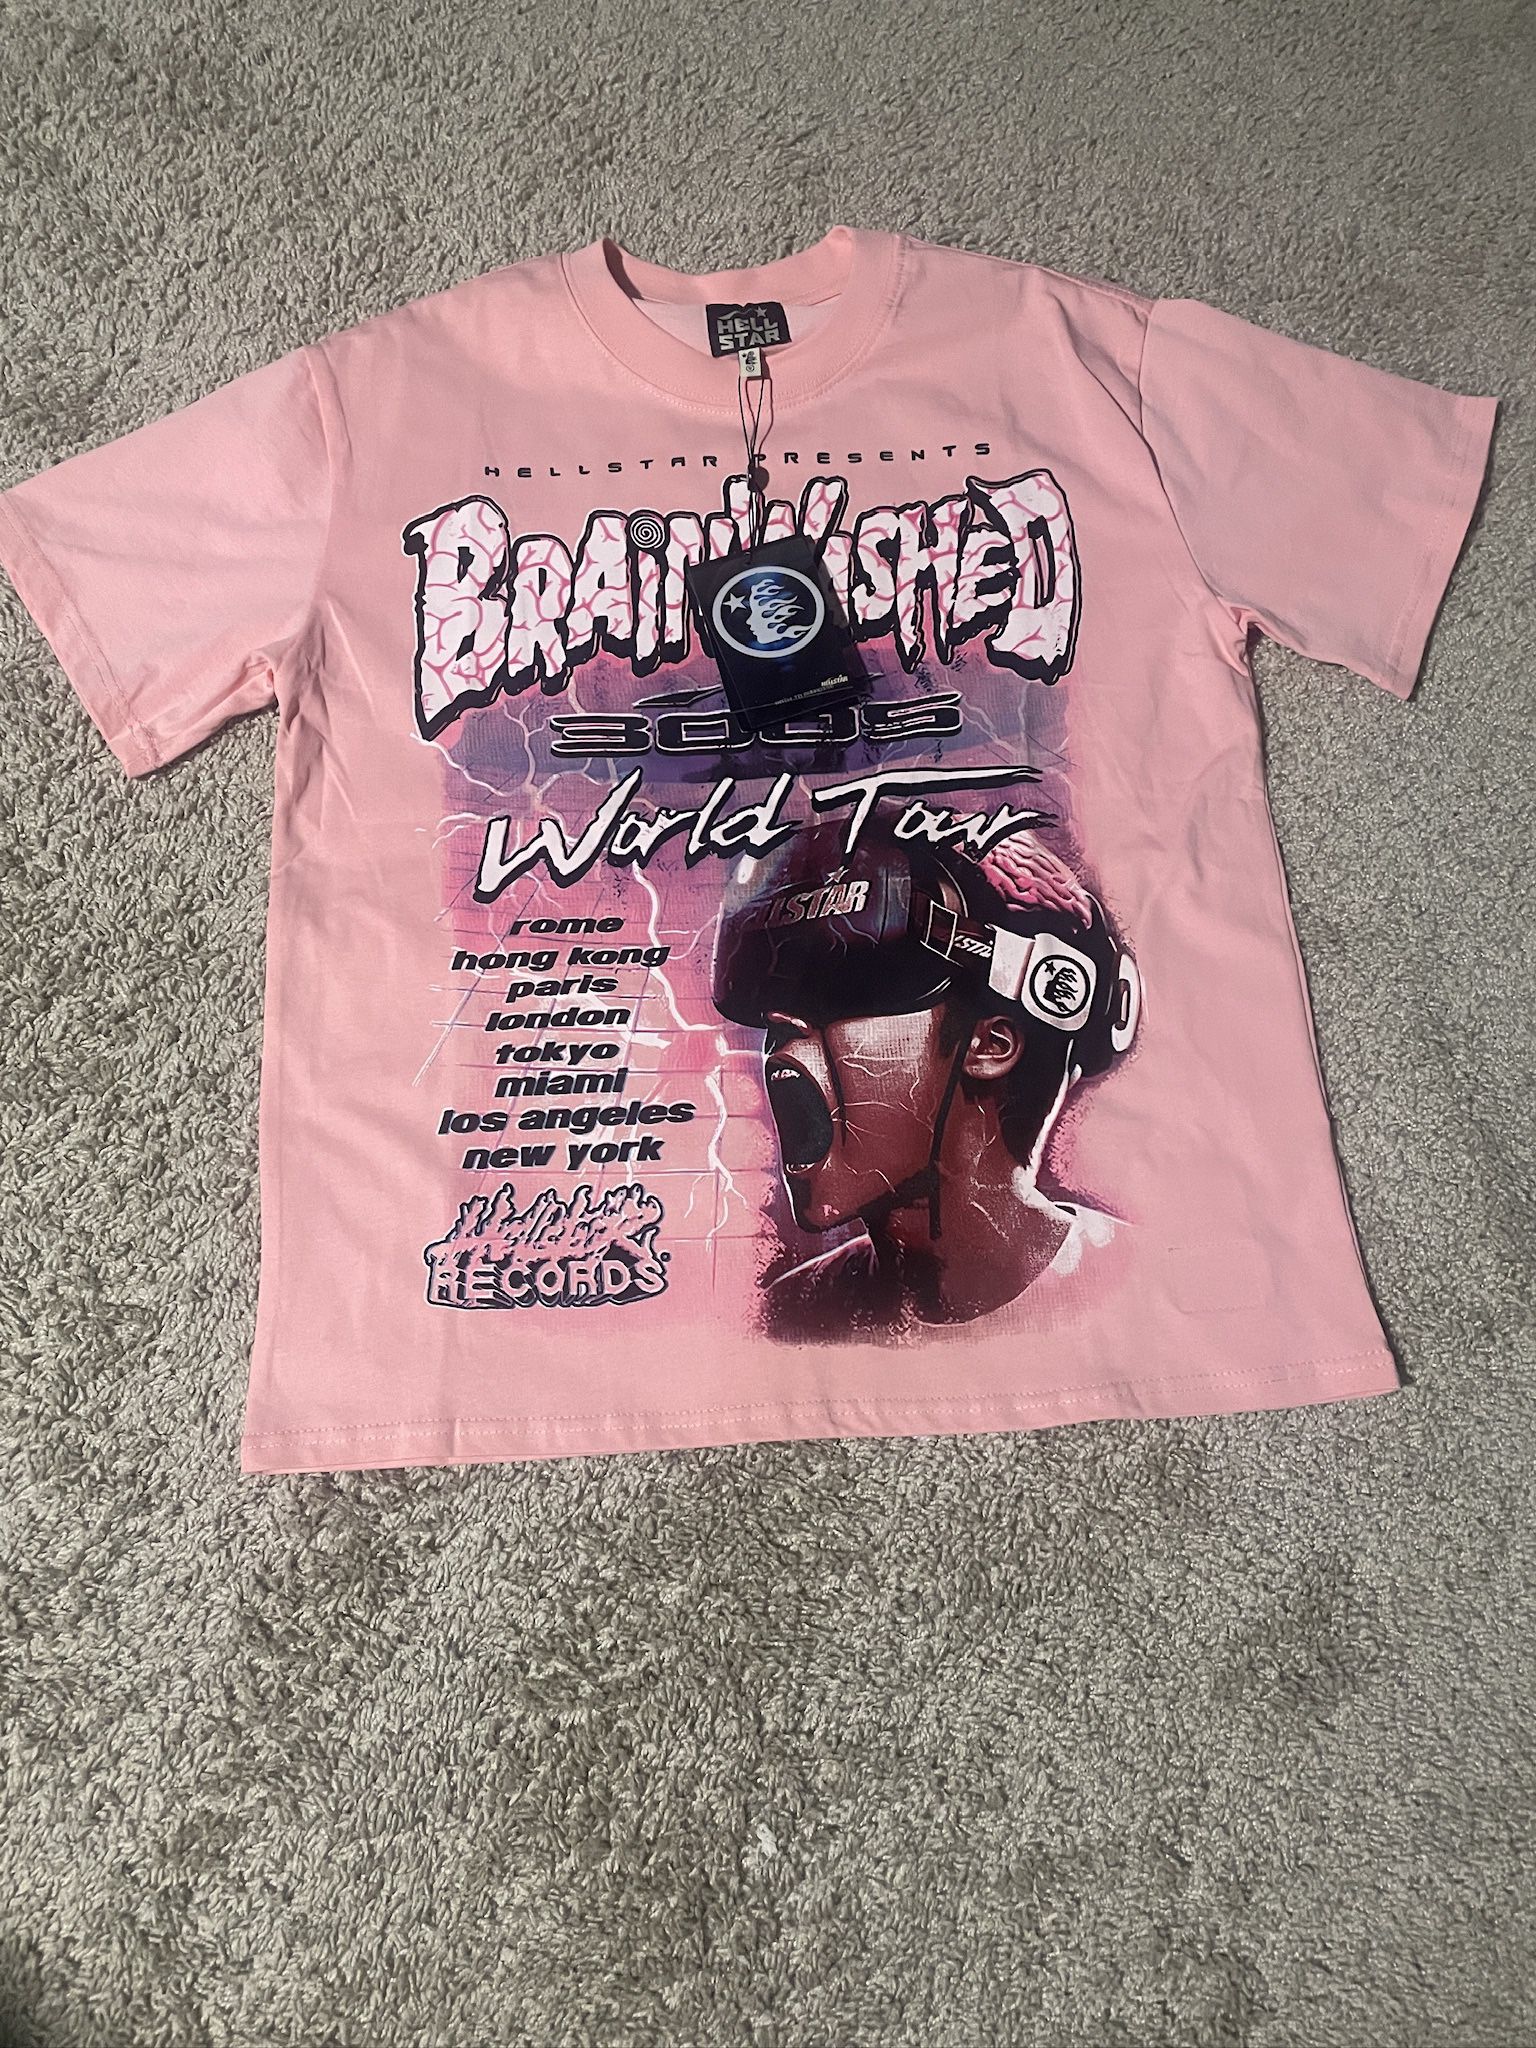 HellStar Brainwashed World Tour shirt